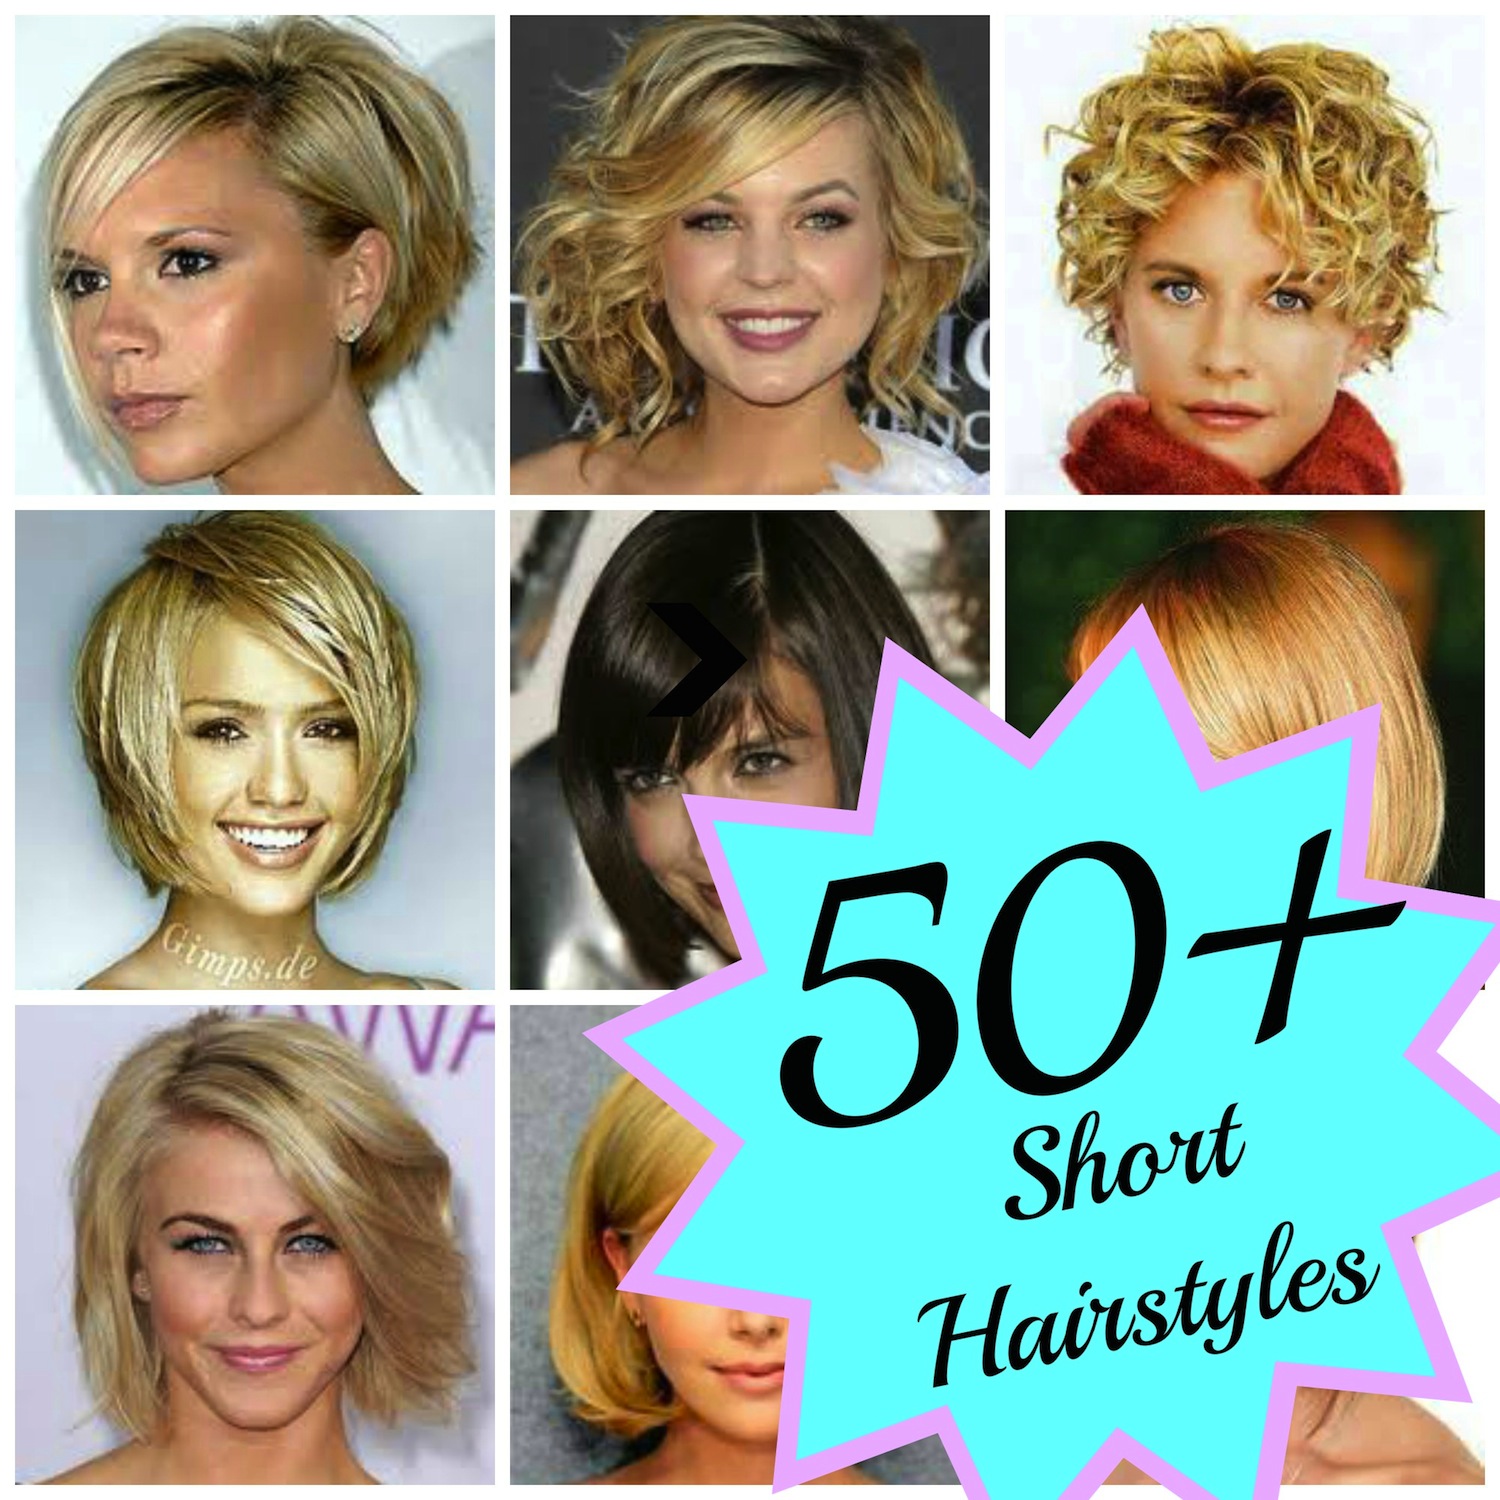 50+ Short Hairstyles